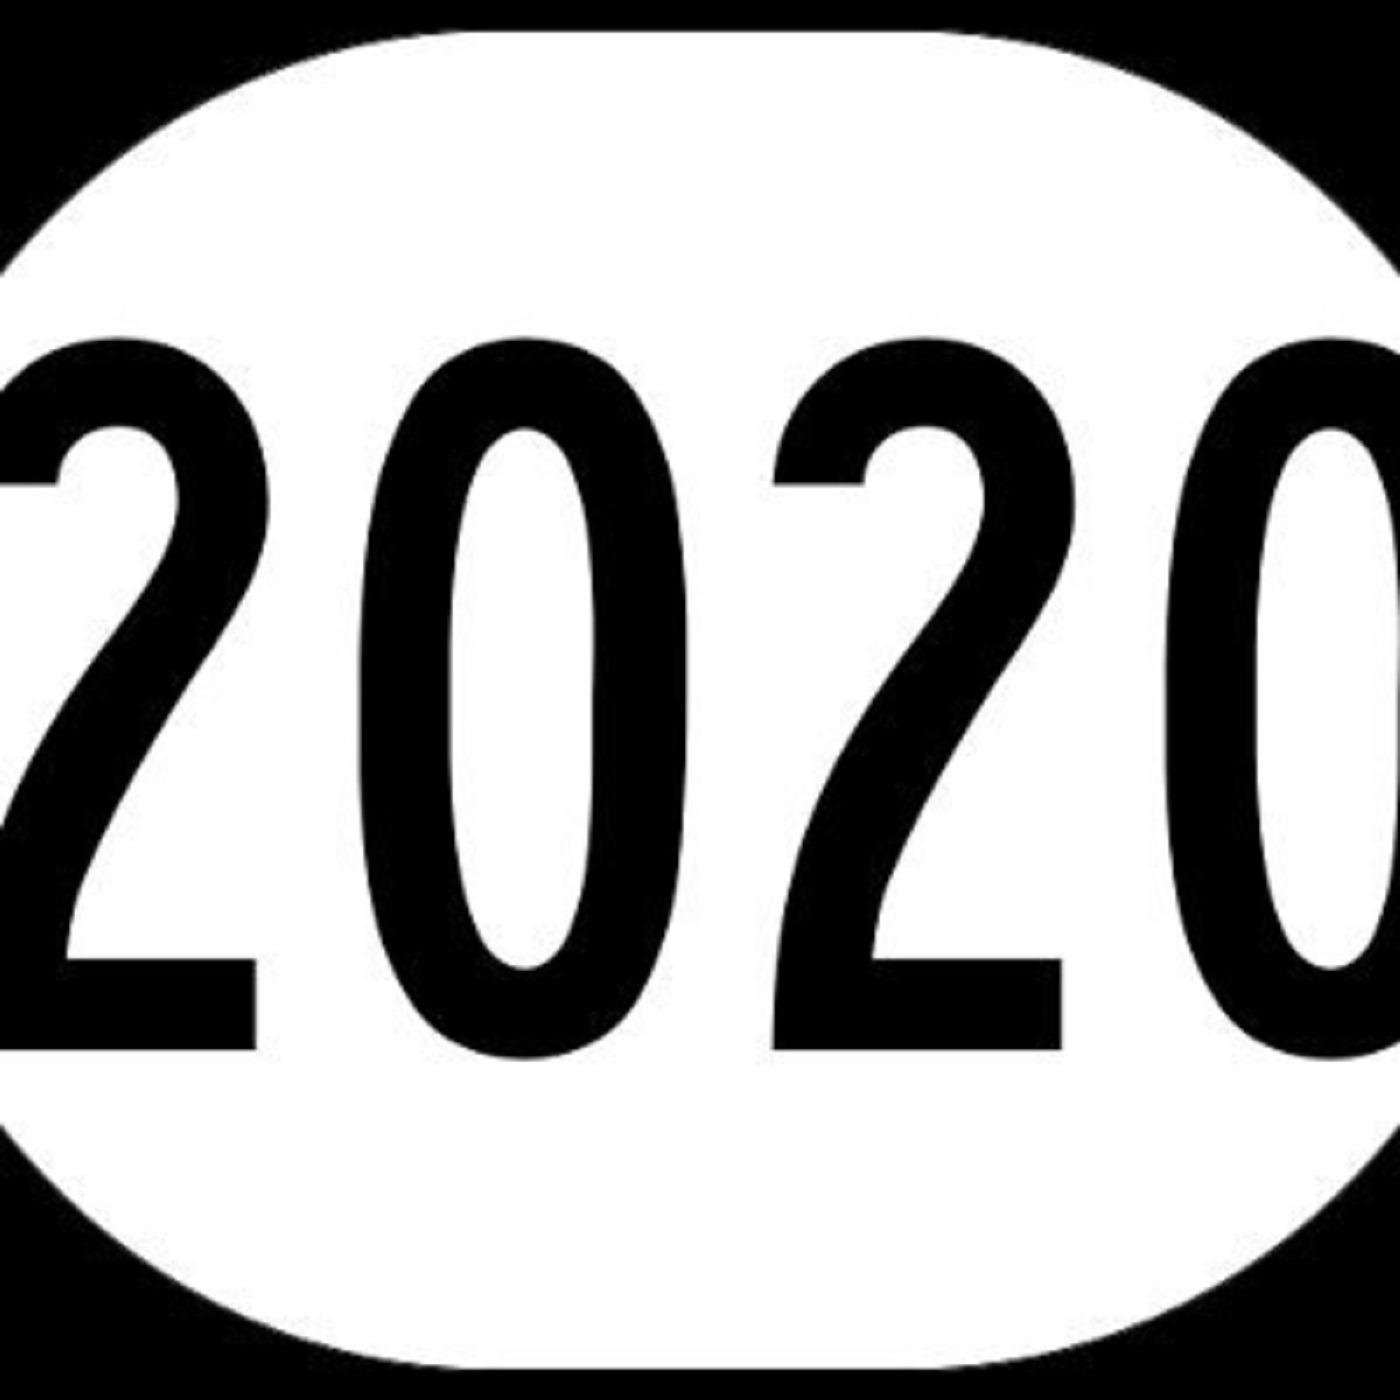 Decade of 2020 Podcast